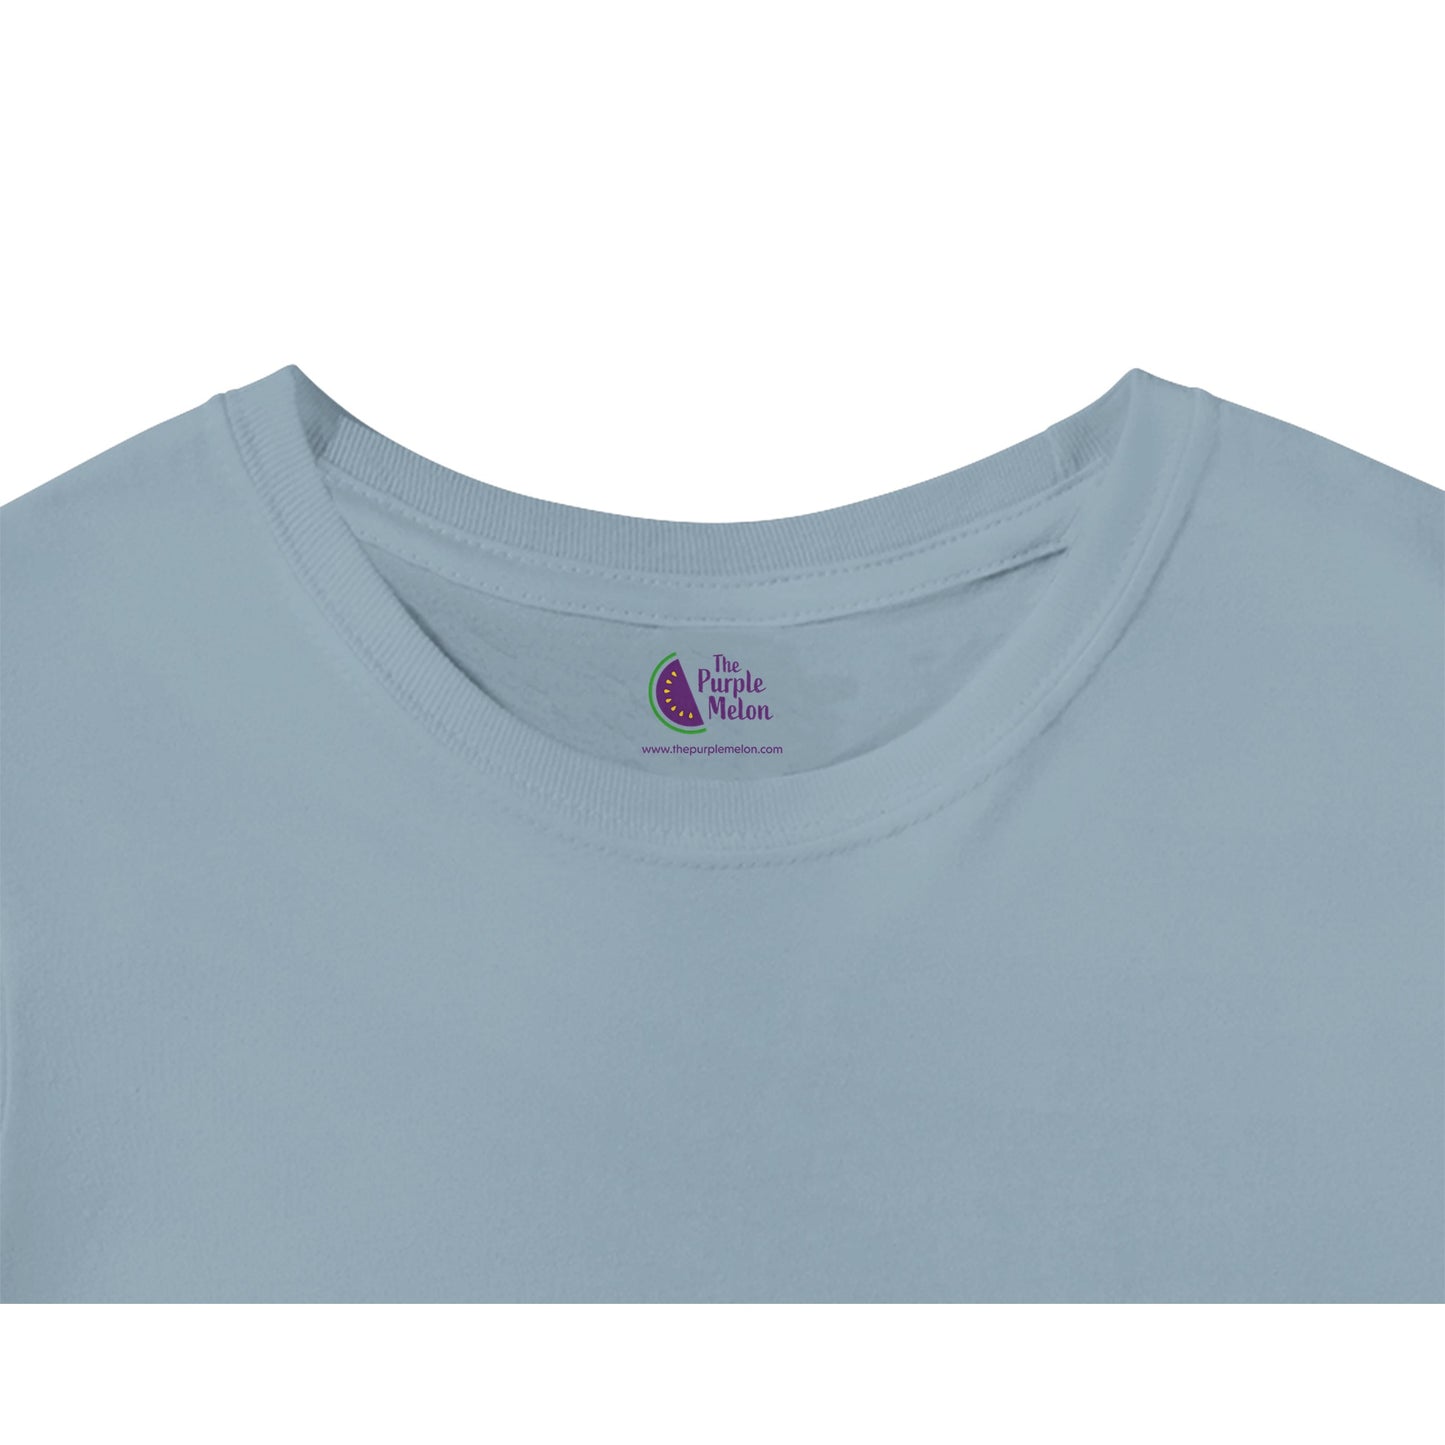 light blue t-shirt neck label with the purple melon logo